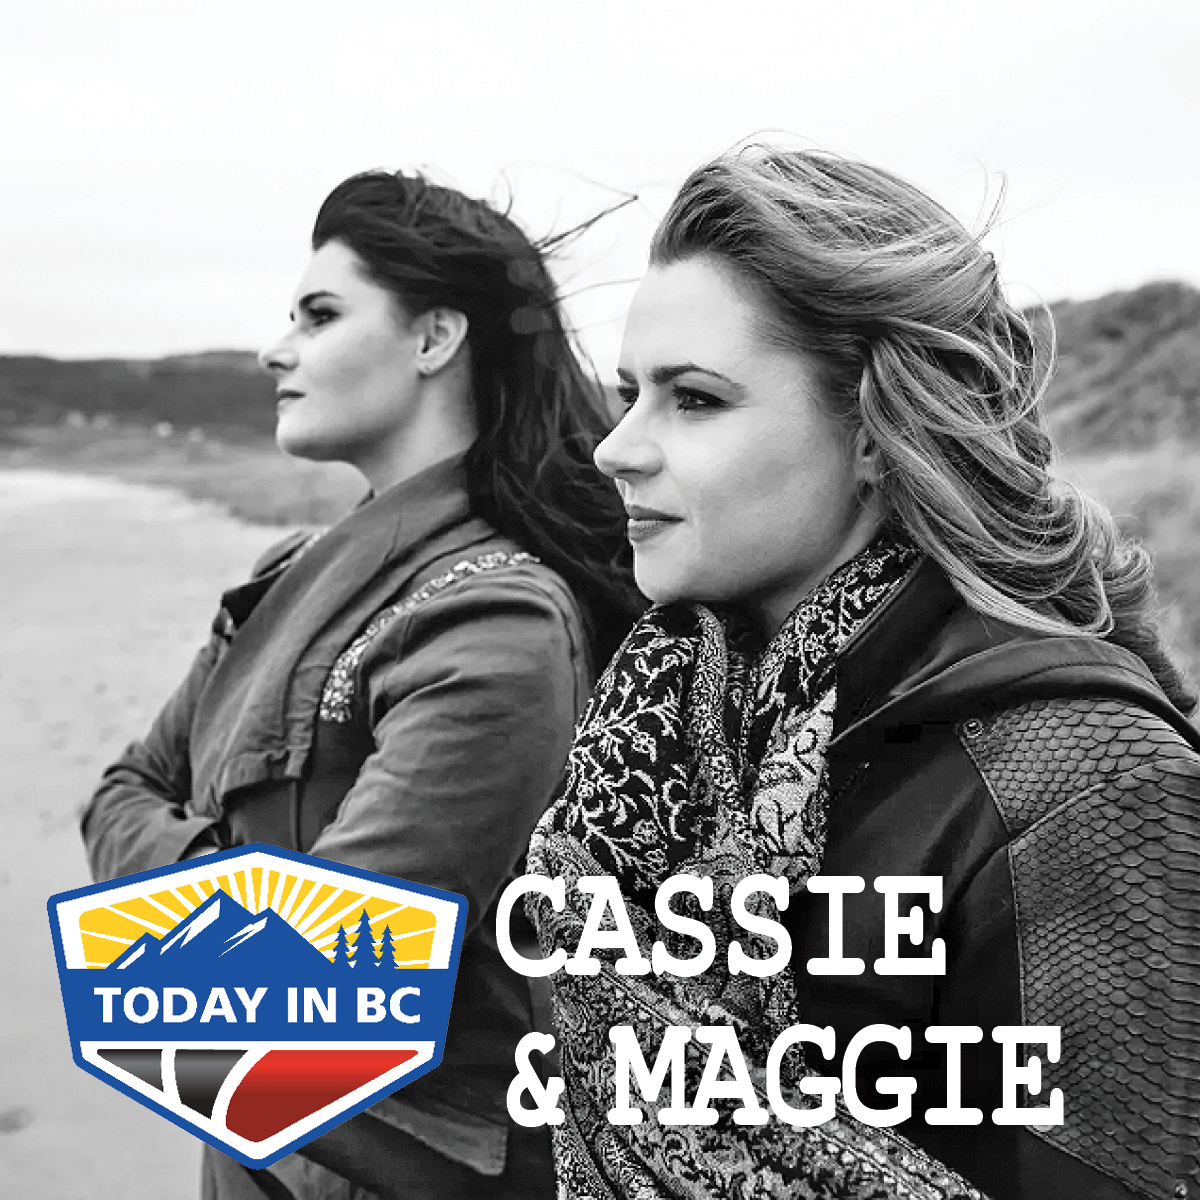 Award winning Celtic Musicians, Cassie and Maggie MacDonald